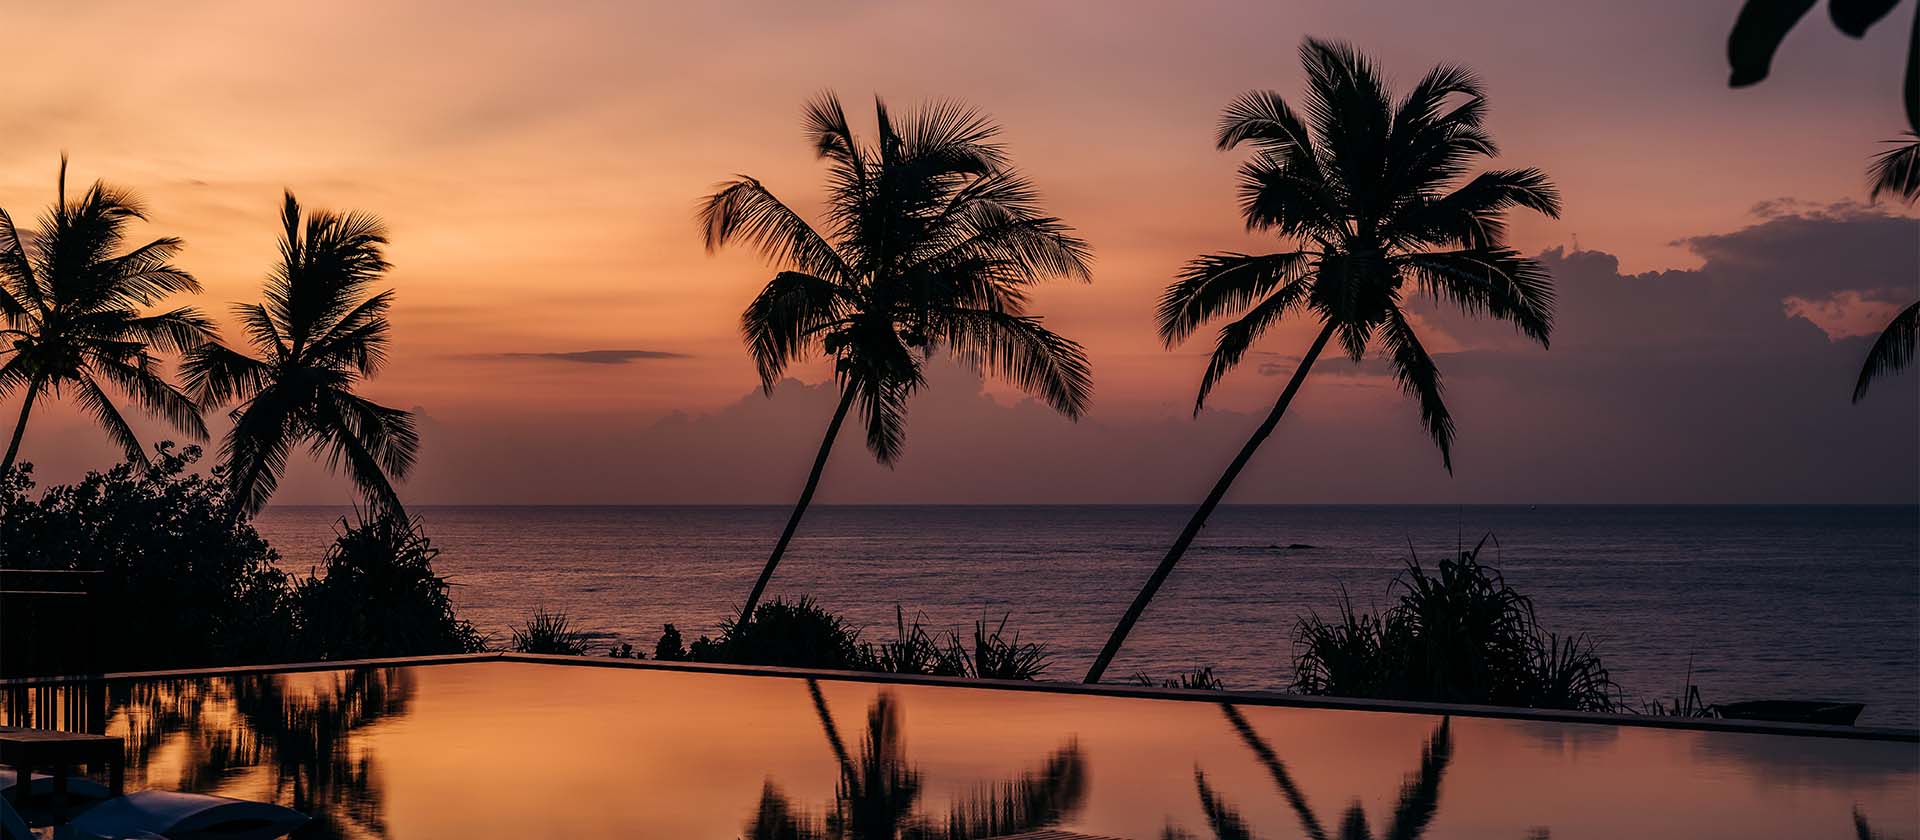 ANI Sri Lanka - Resort - Swimming Pool at Sunrise